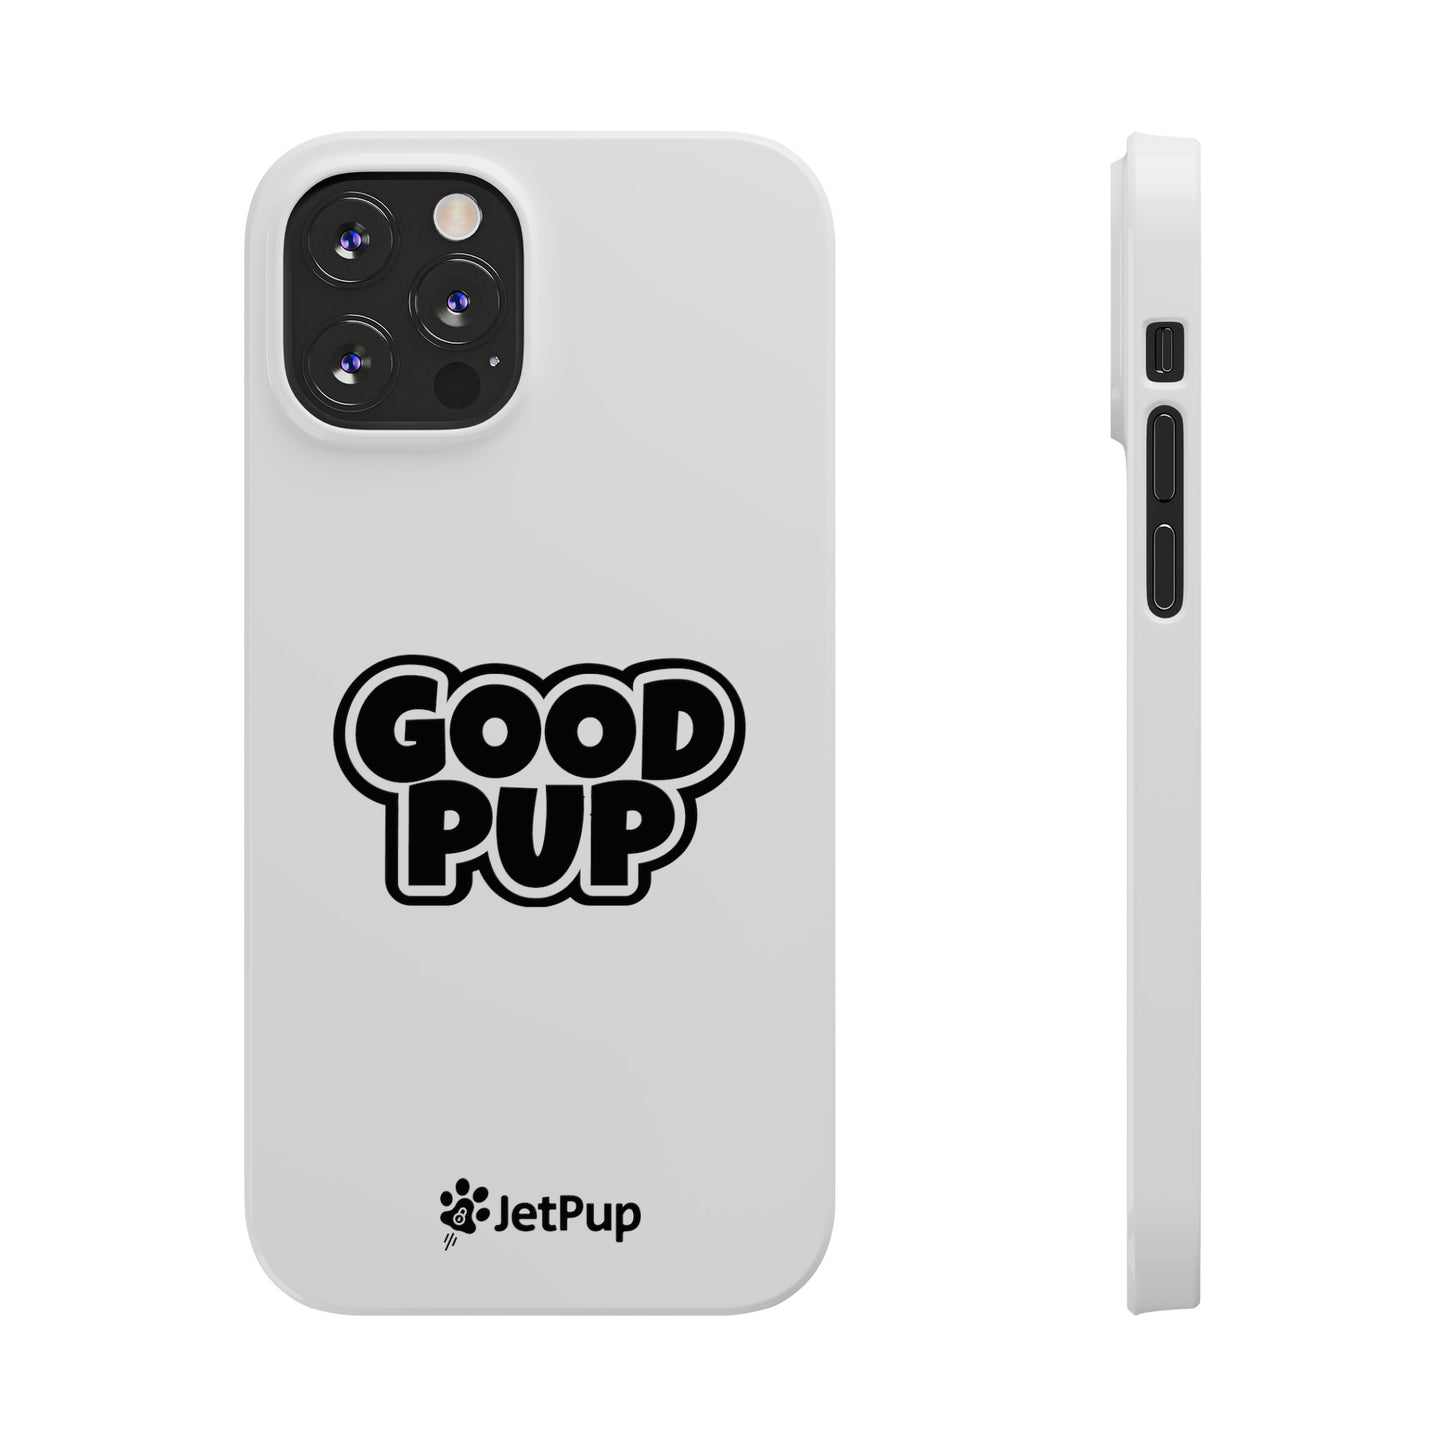 Good Pup Slim iPhone Cases - White